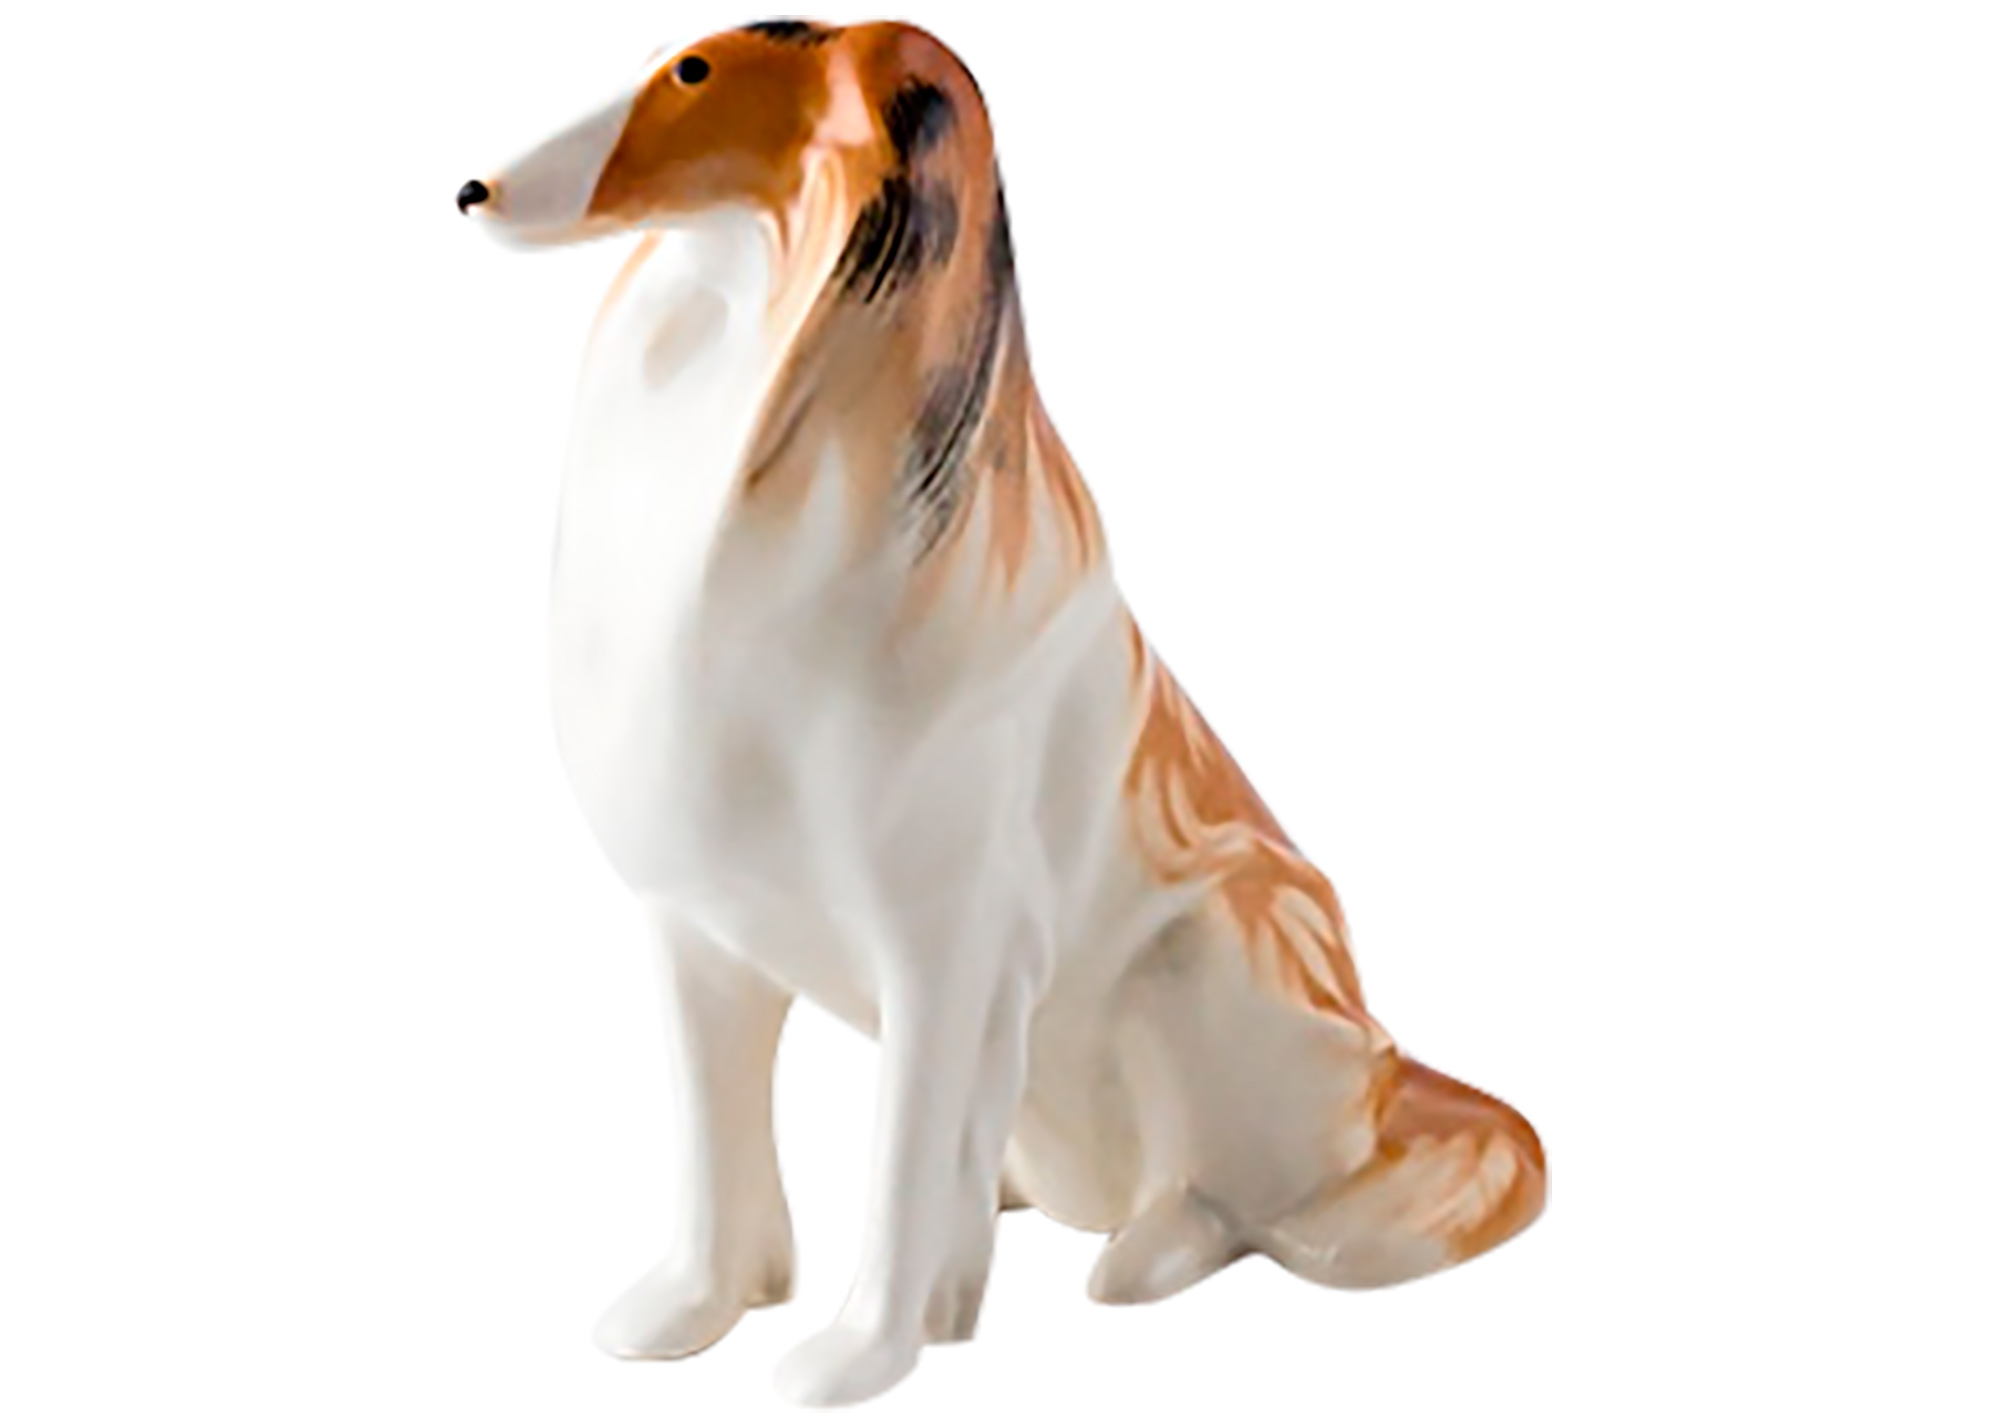 Buy Collie Dog Figurine at GoldenCockerel.com